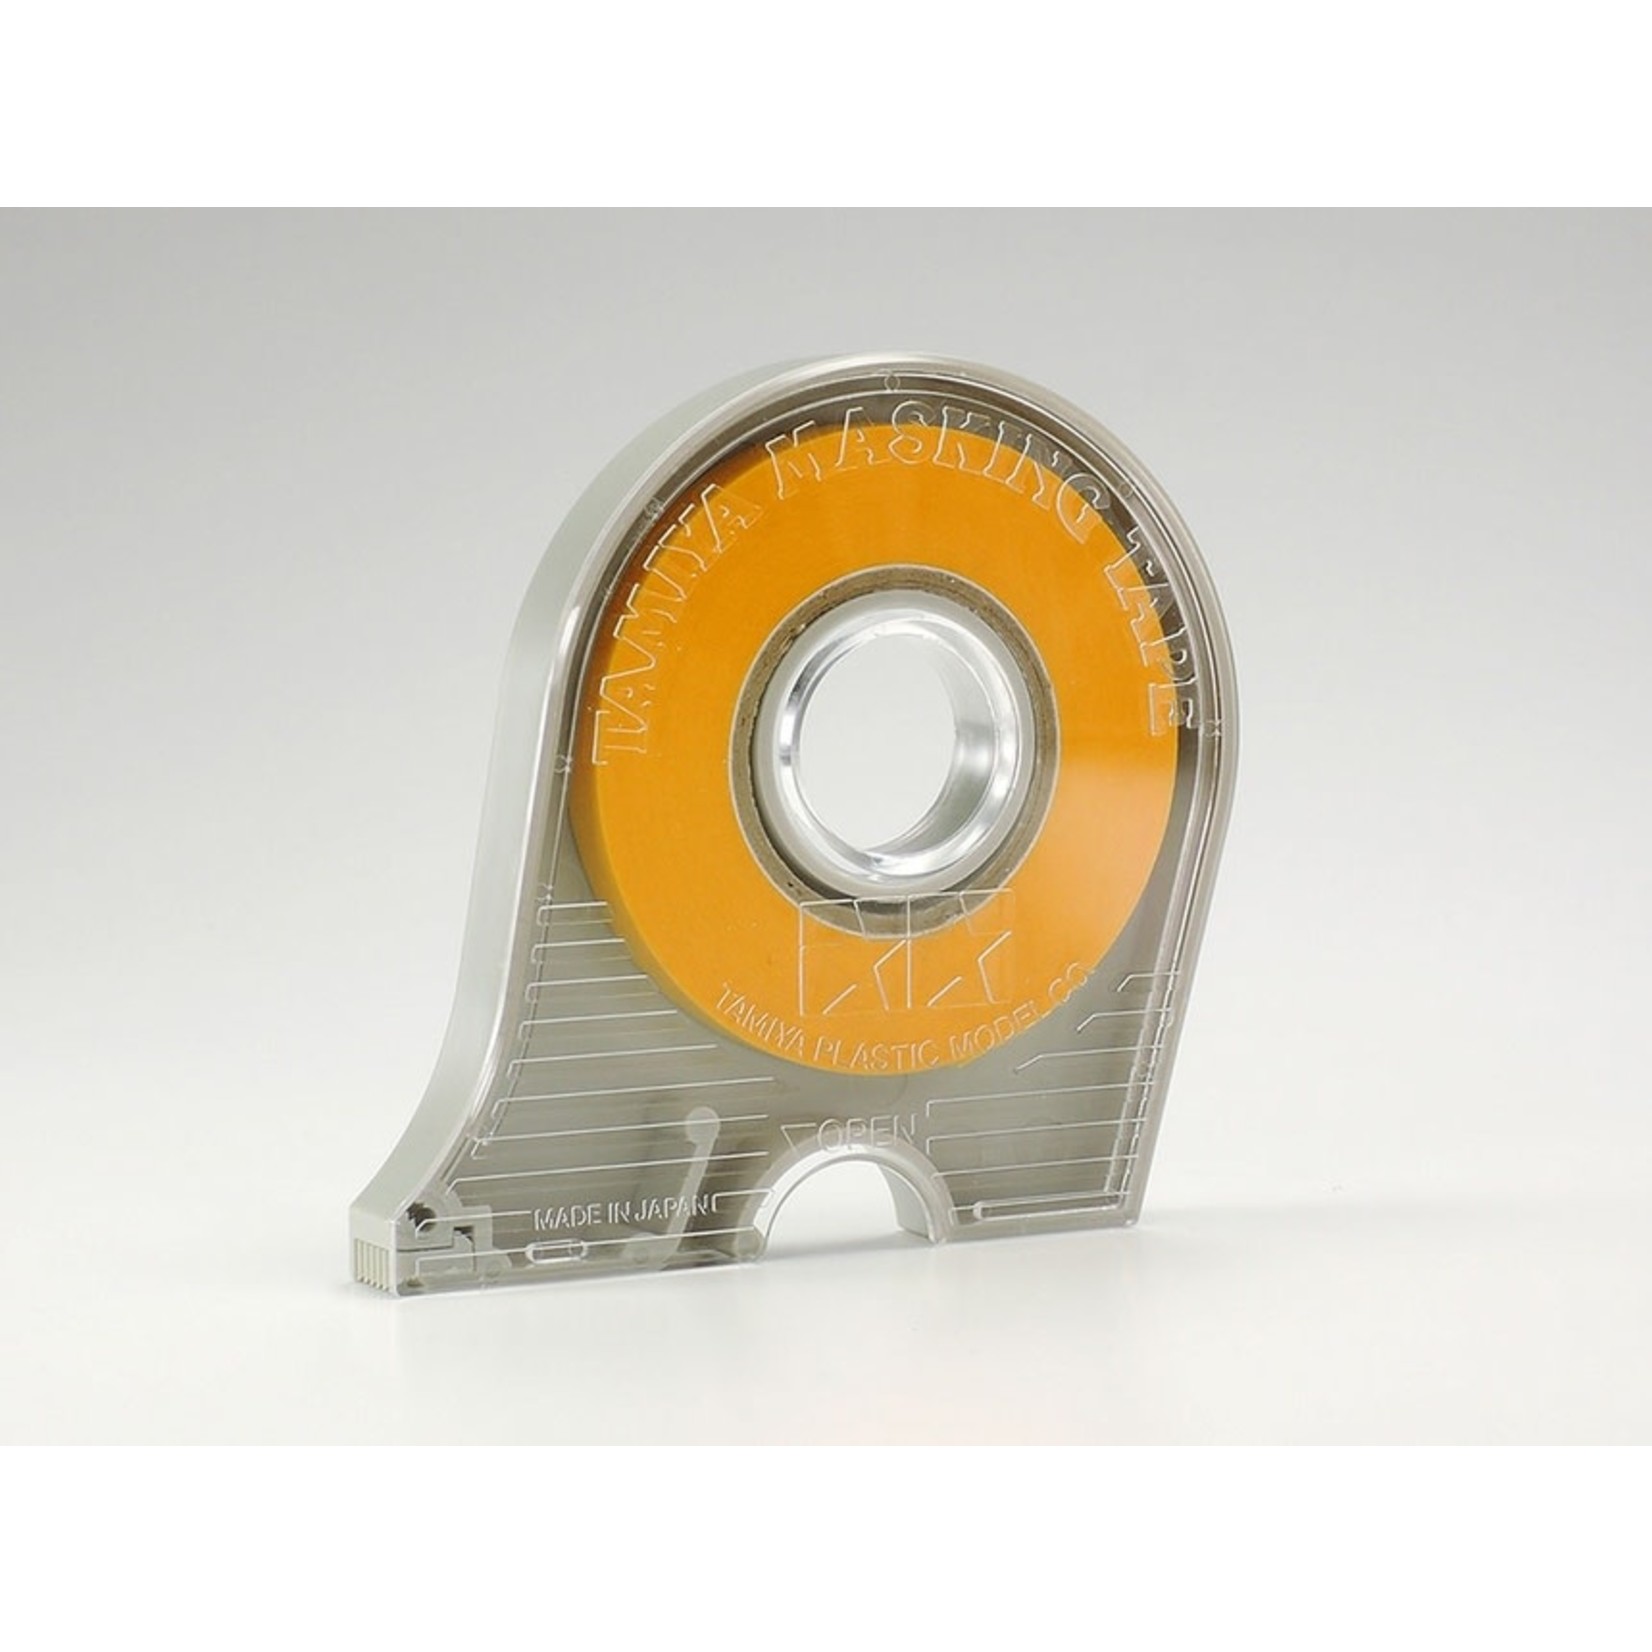 Tamiya TAM87031 Tamiya Masking Tape, 10mm